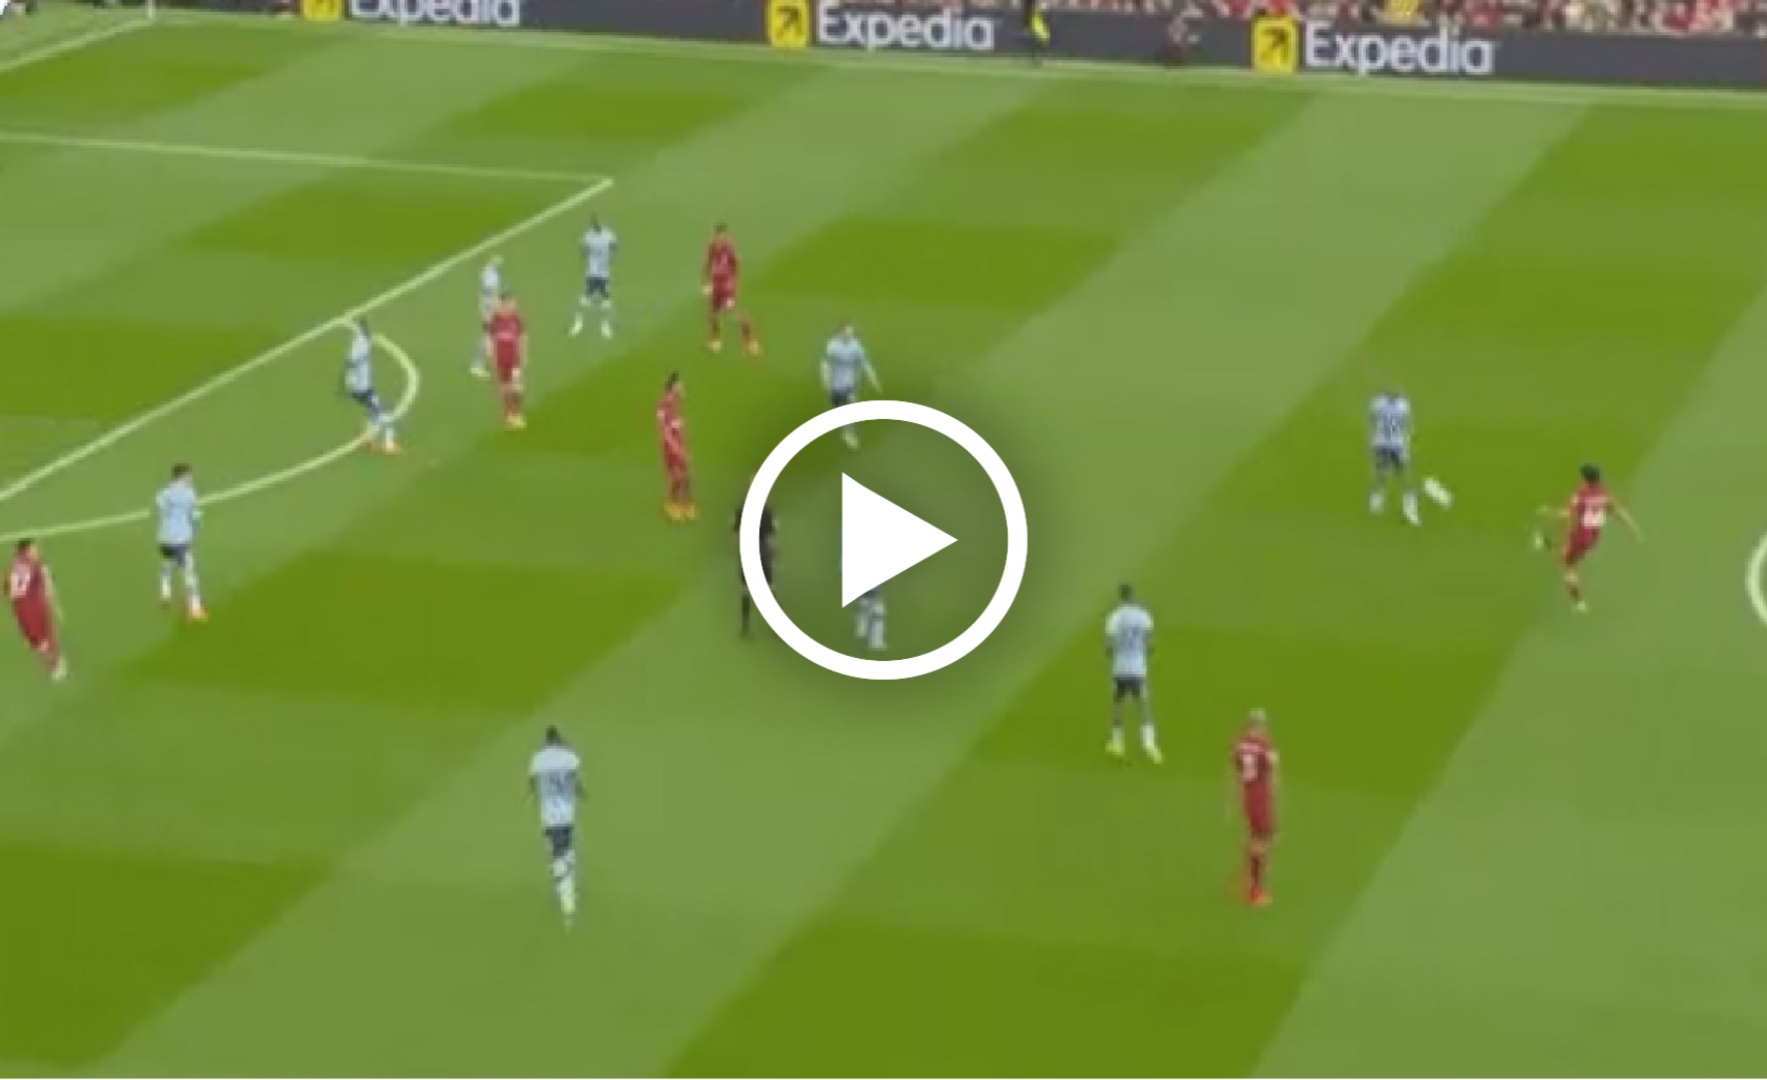 (Video) Watch : Trent plays magnific through ball but Nunez couldn't convert 1 Sportelo